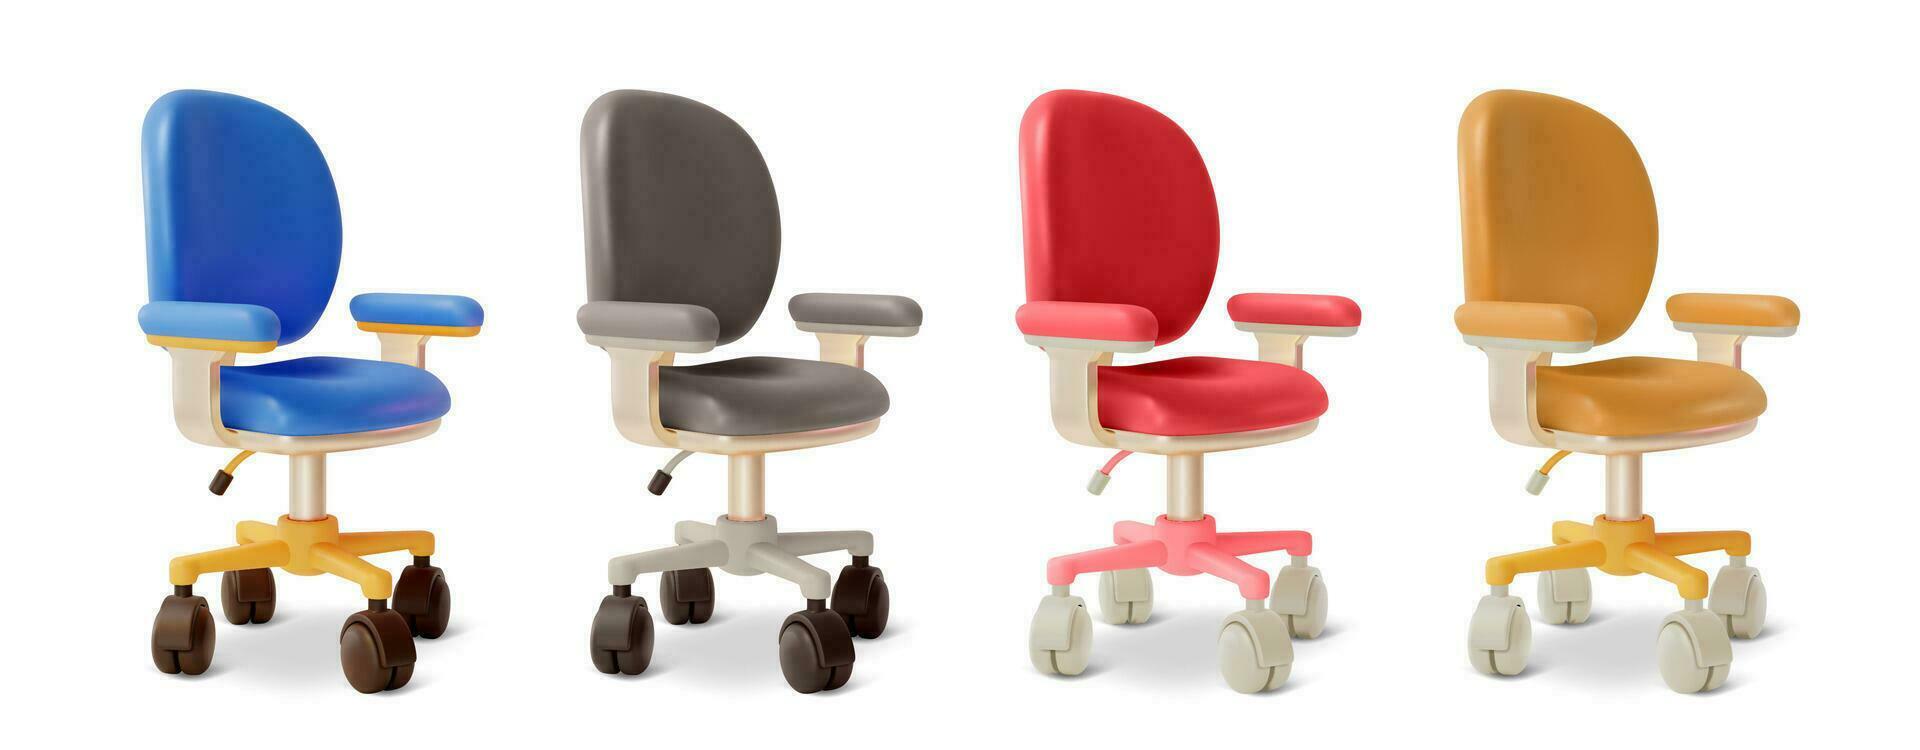 3d anders Farbe Büro Stuhl auf Räder Karikatur Stil. Vektor